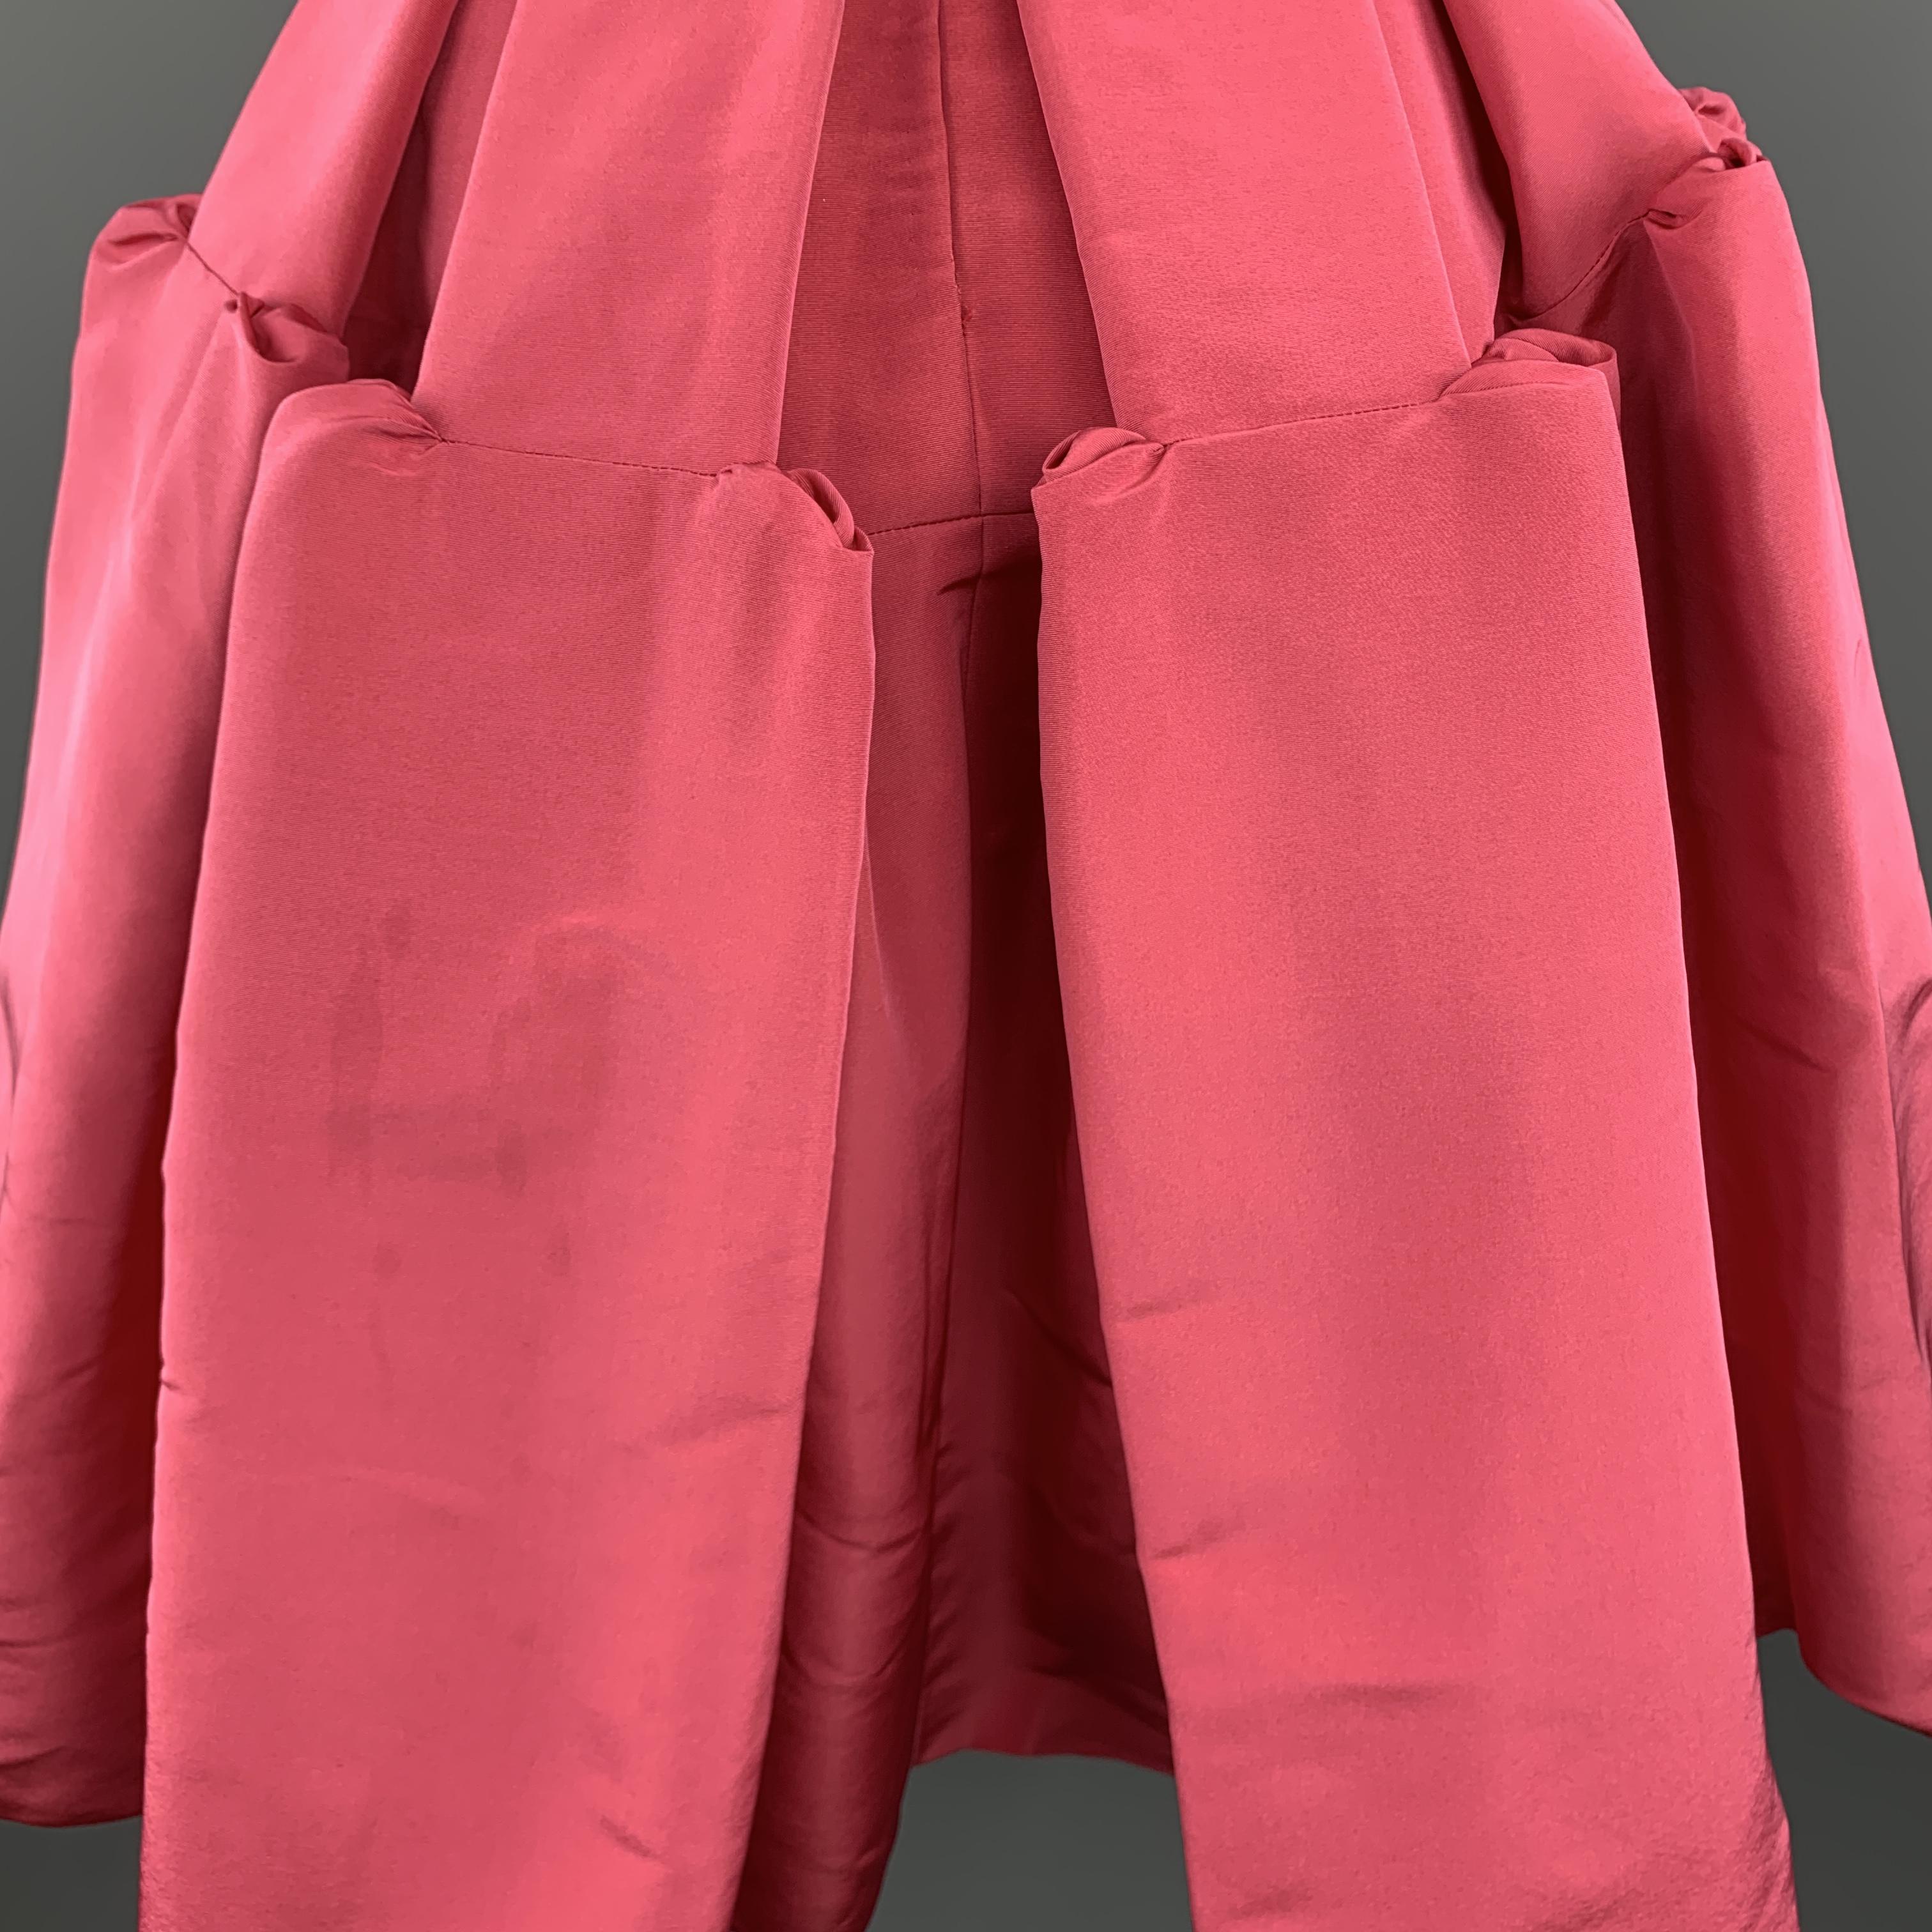 OSCAR DE LA RENTA Size 8 Pink Faille Structured Skirt Cocktail Dress 3